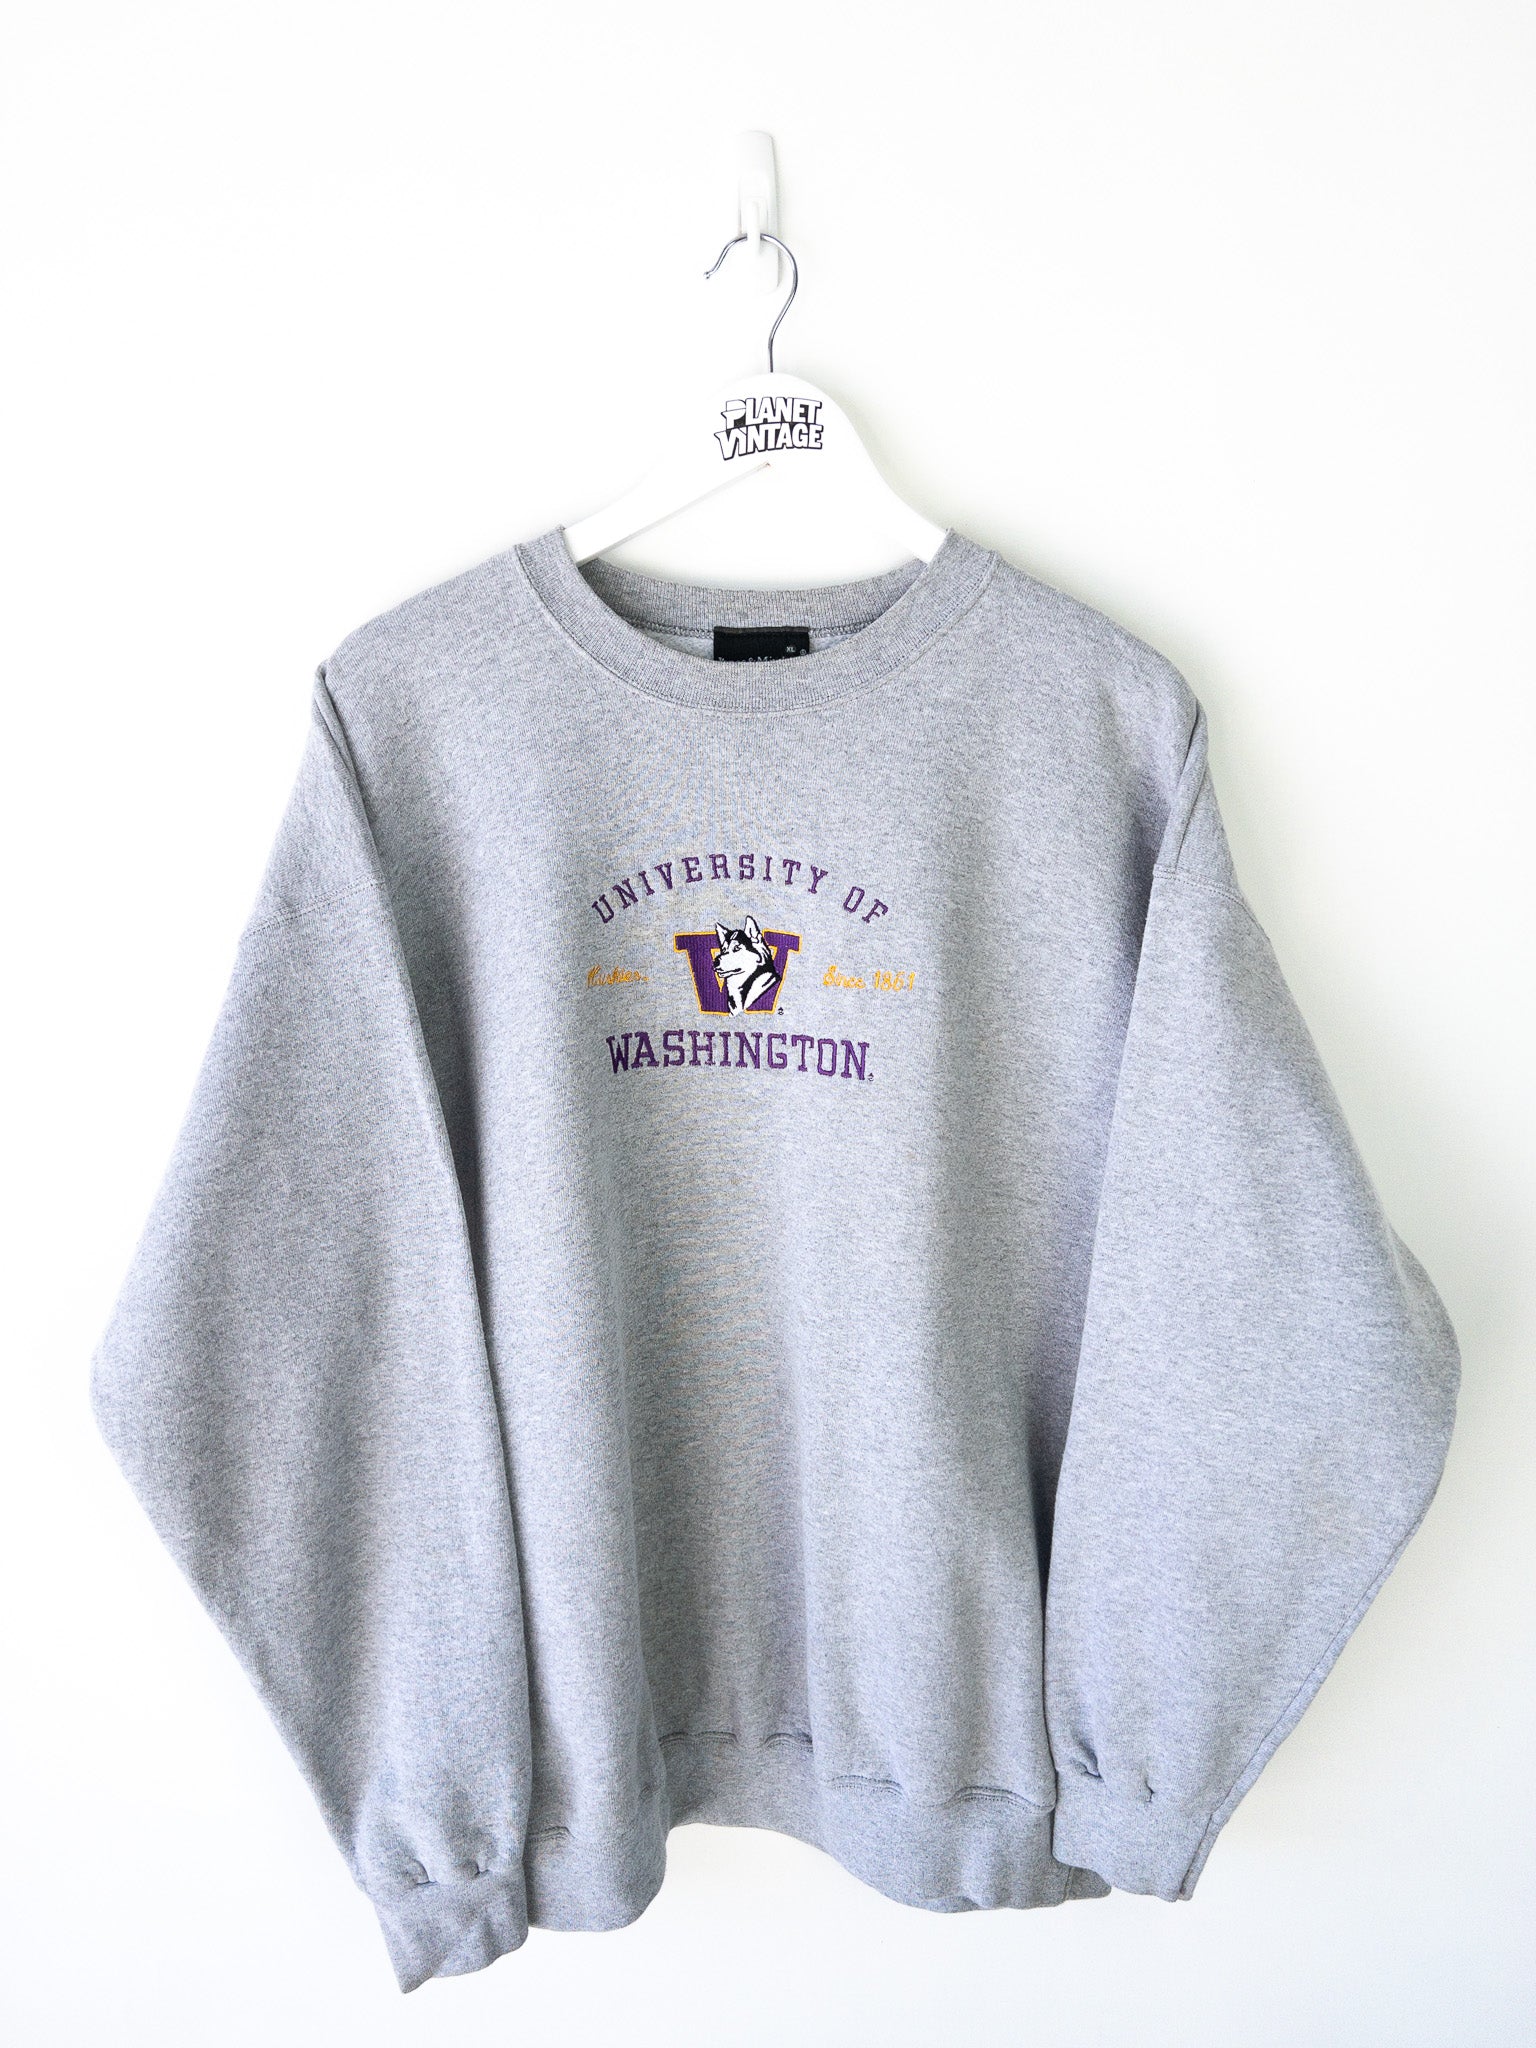 Vintage University of Washington Sweatshirt (XL)